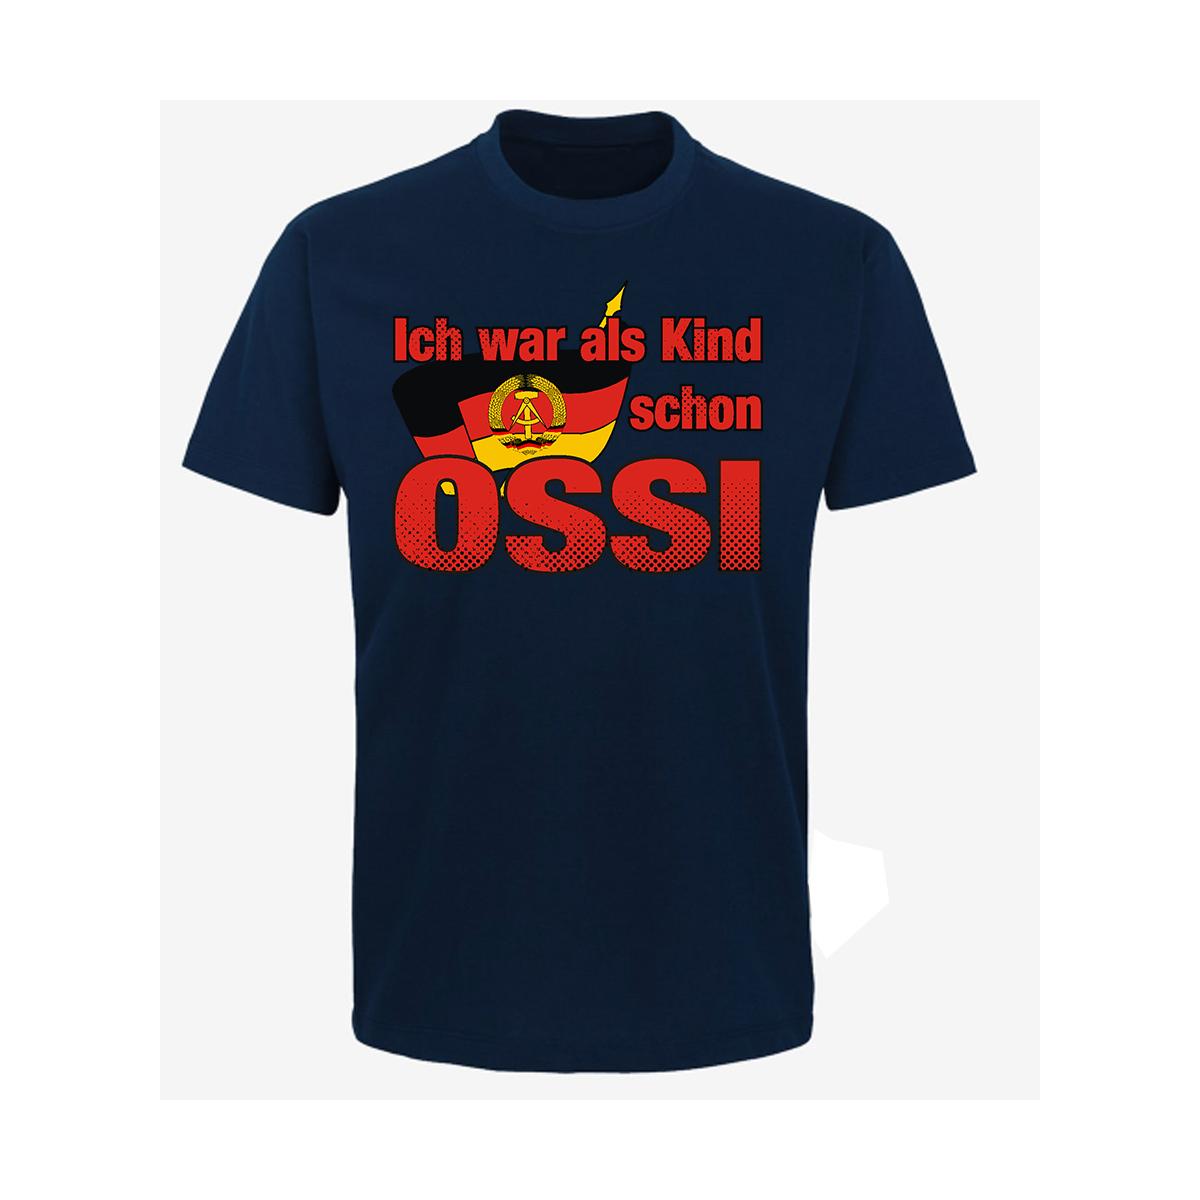 Ich war als Kind schon Ossi - Männer T-Shirt - navy